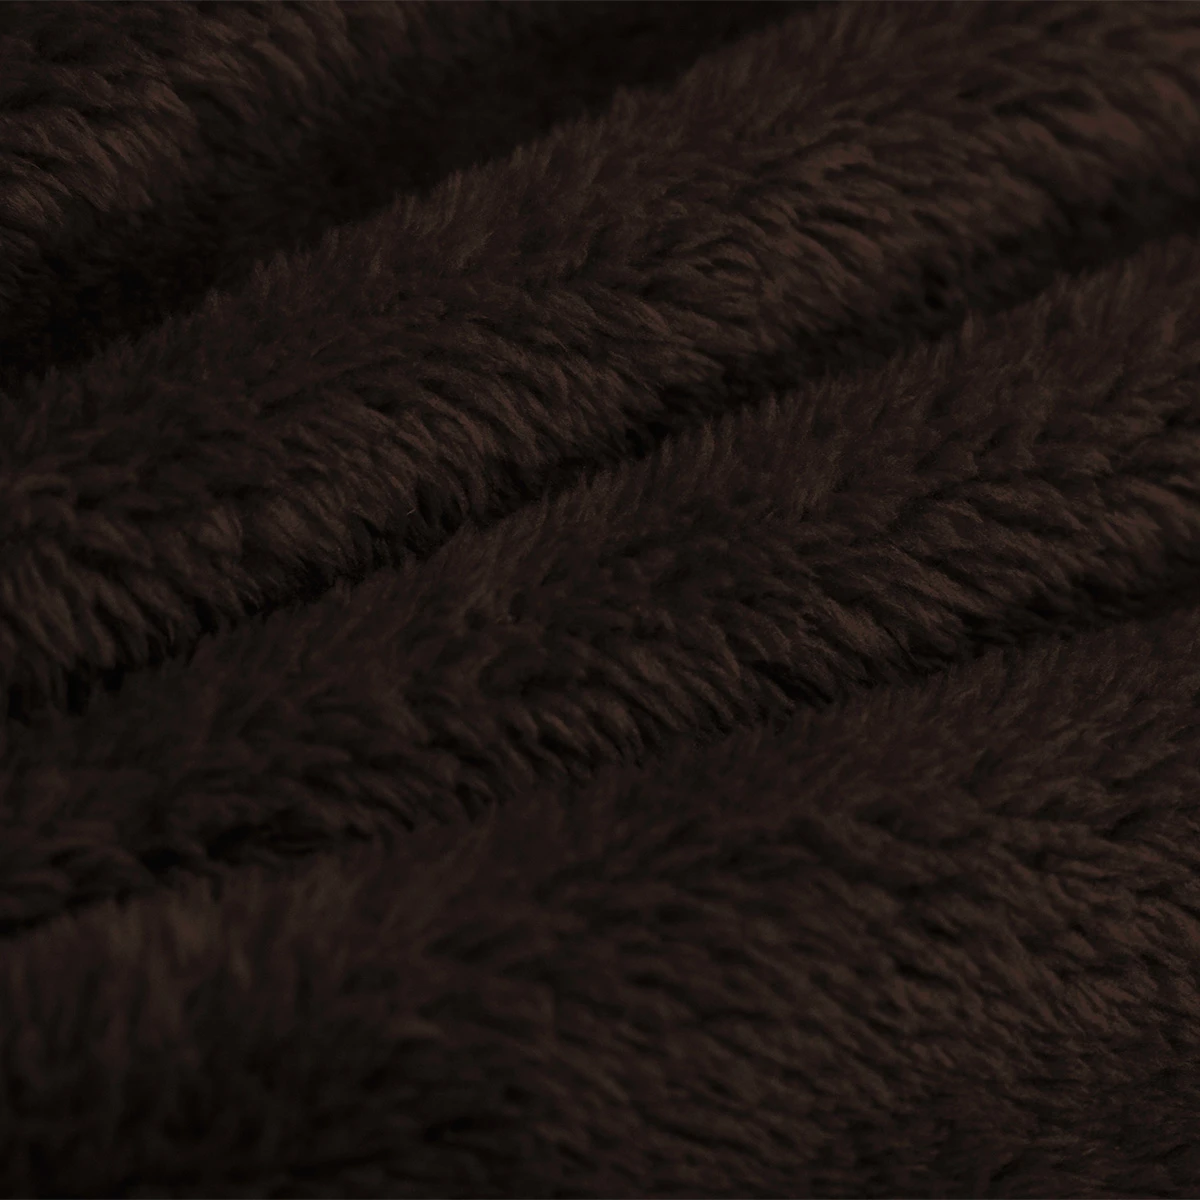 Fashion Hometex: Blanket Supplier |  Ready-to-ship Sable Plush Blanket (Chocolate Brown)